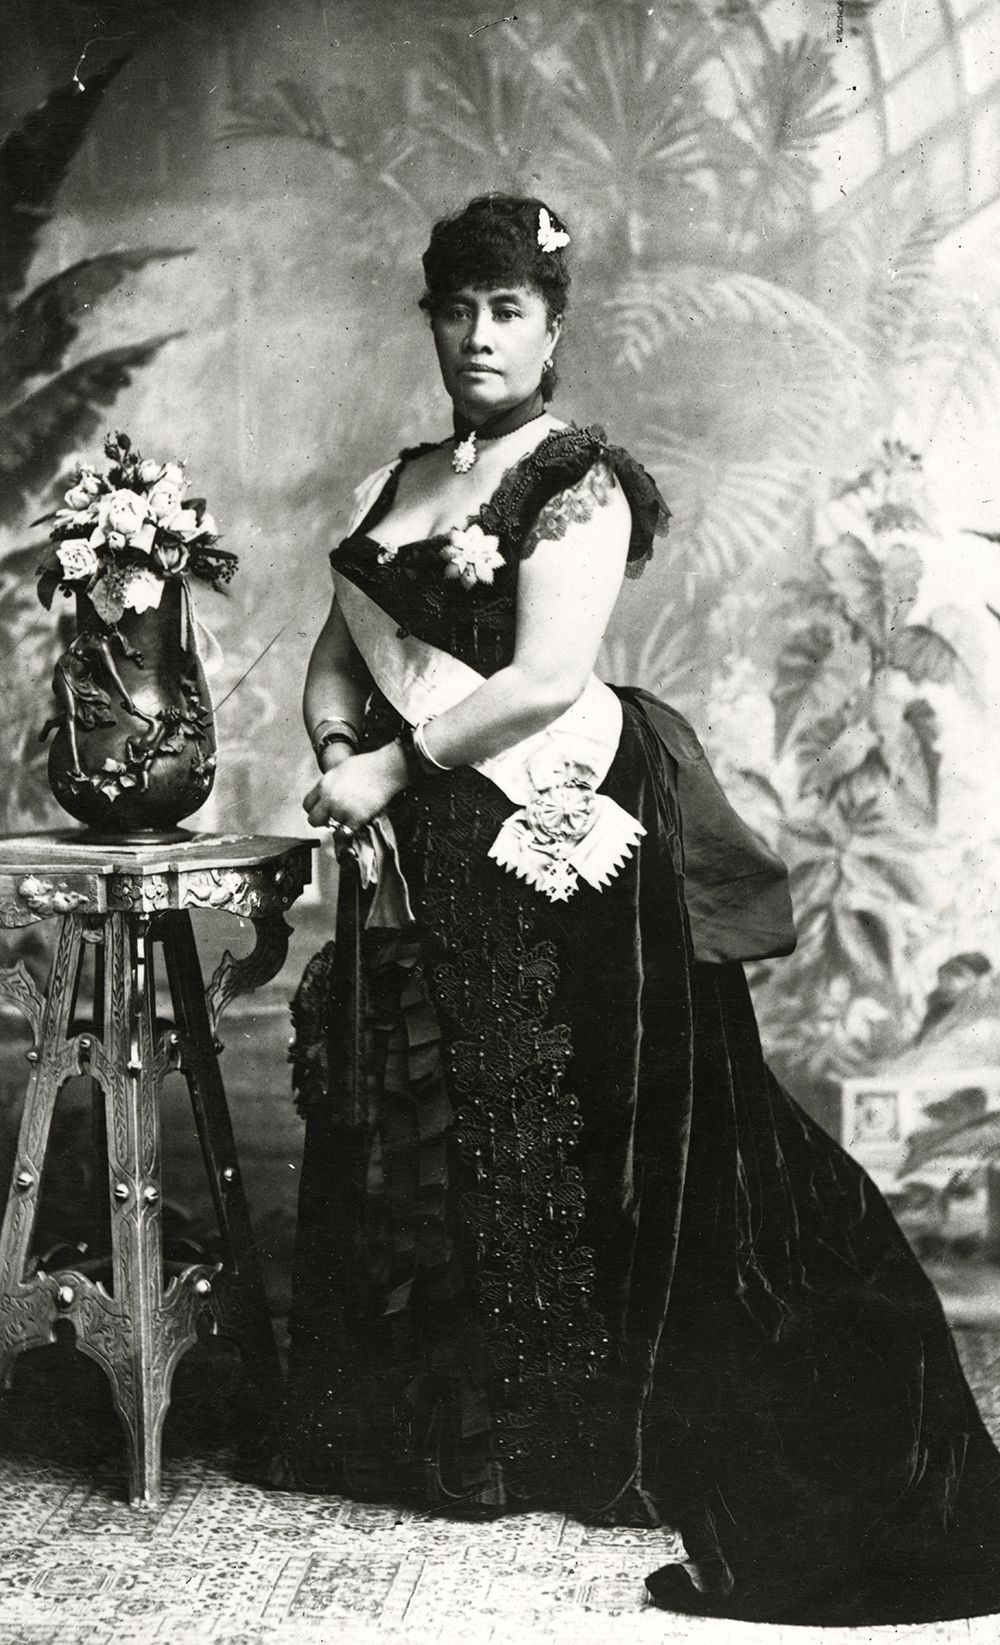 Queen Liliʻuokalani's 1887 portrait